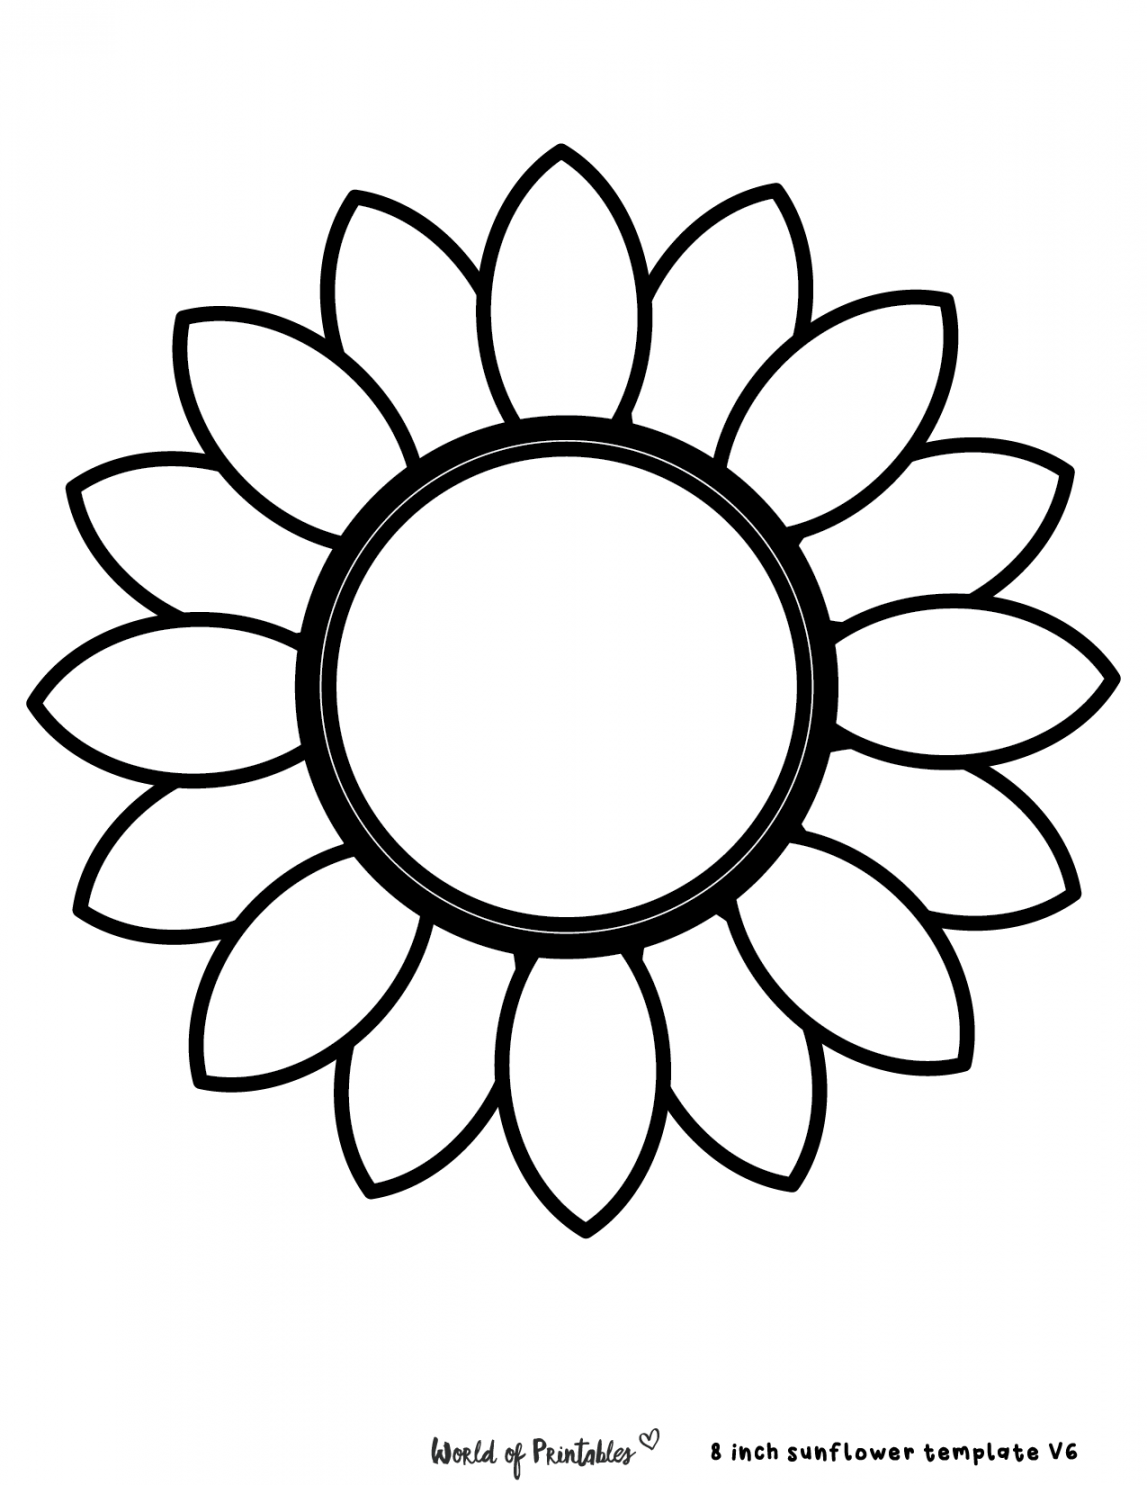 Best Sunflower Templates - World of Printables - FREE Printables - Sunflower Cut Out Template